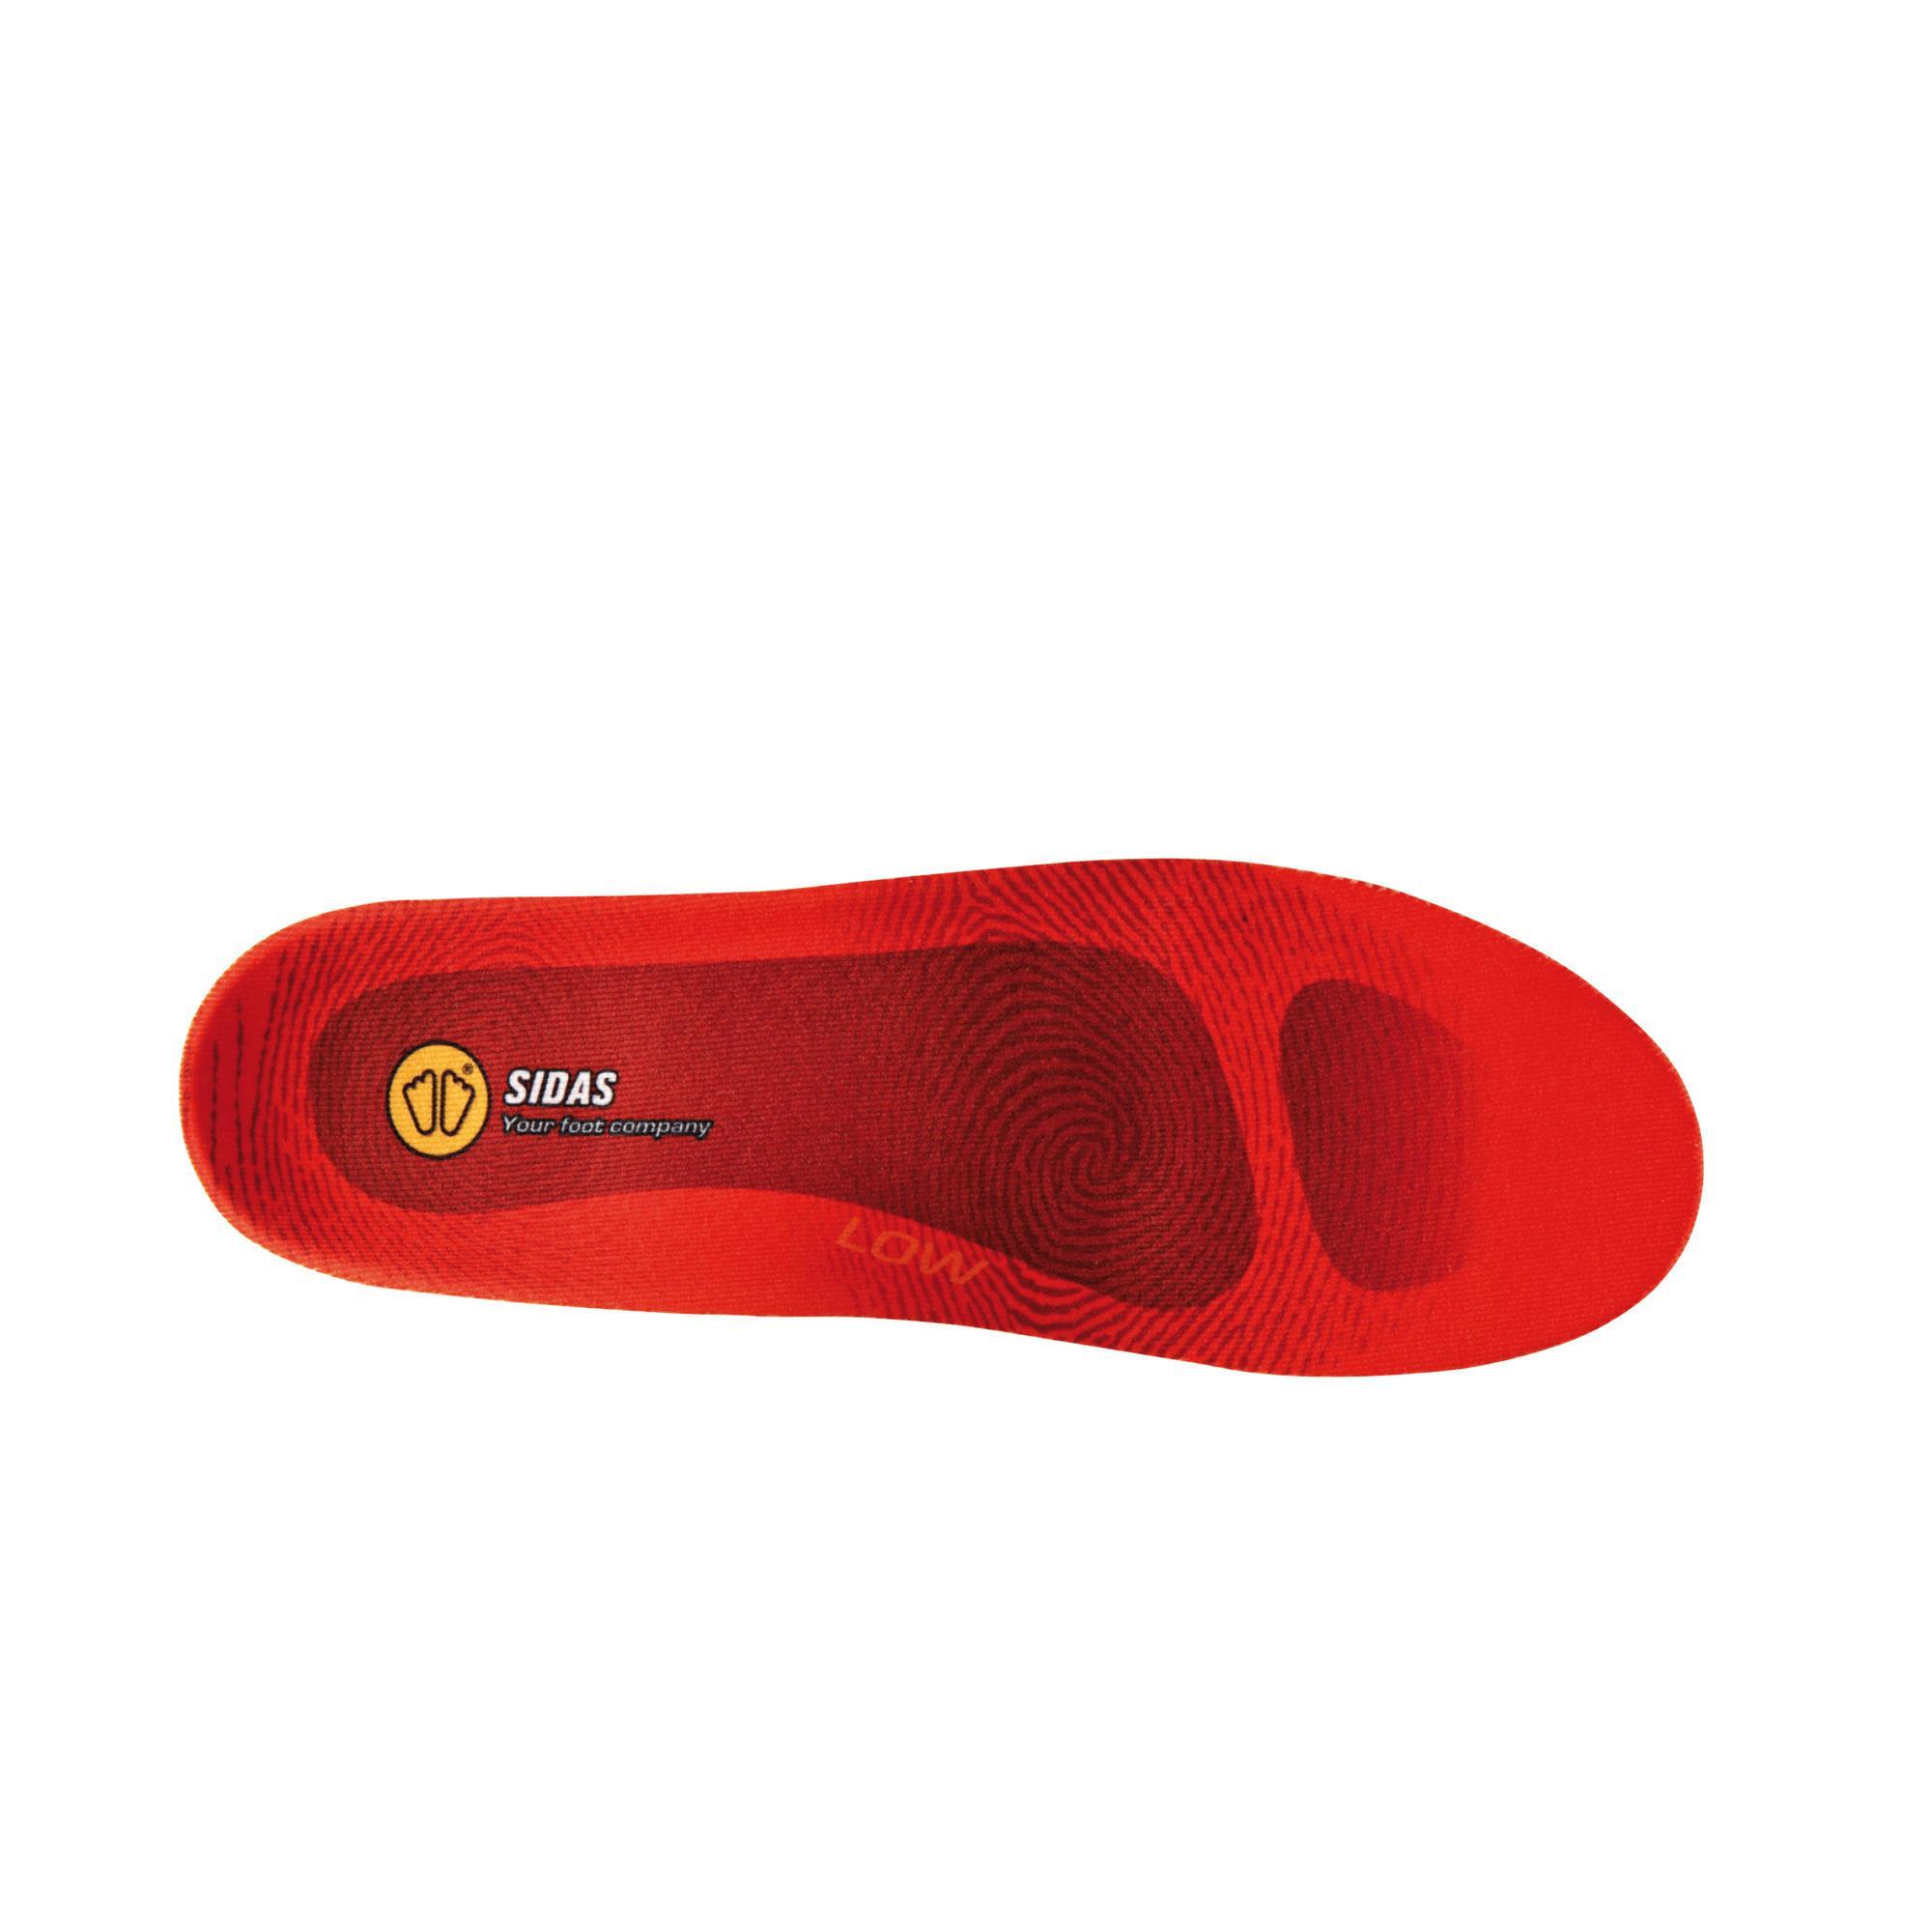 Ski shoe soles for flat feet SIDAS 